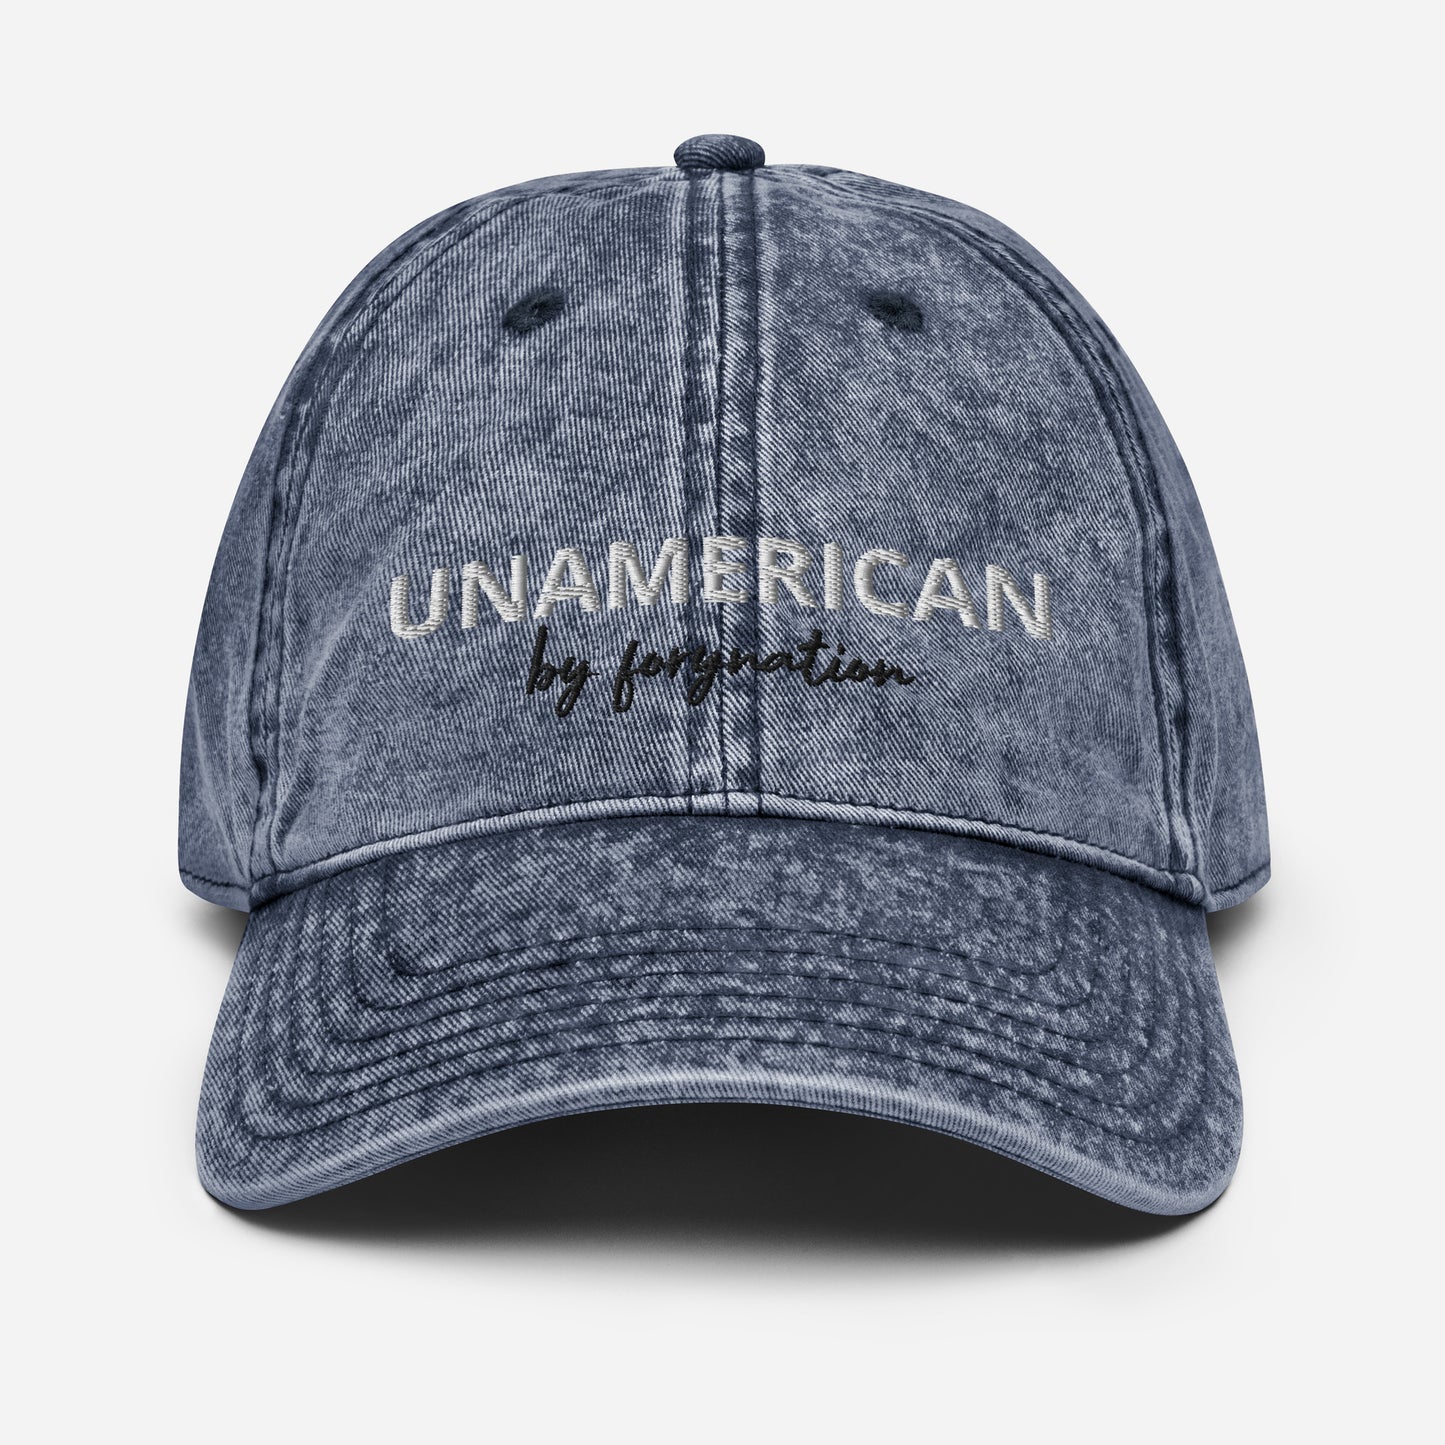 FN UNAMERICAN UNISEX: Vintage Denim Dad Hat (navy)